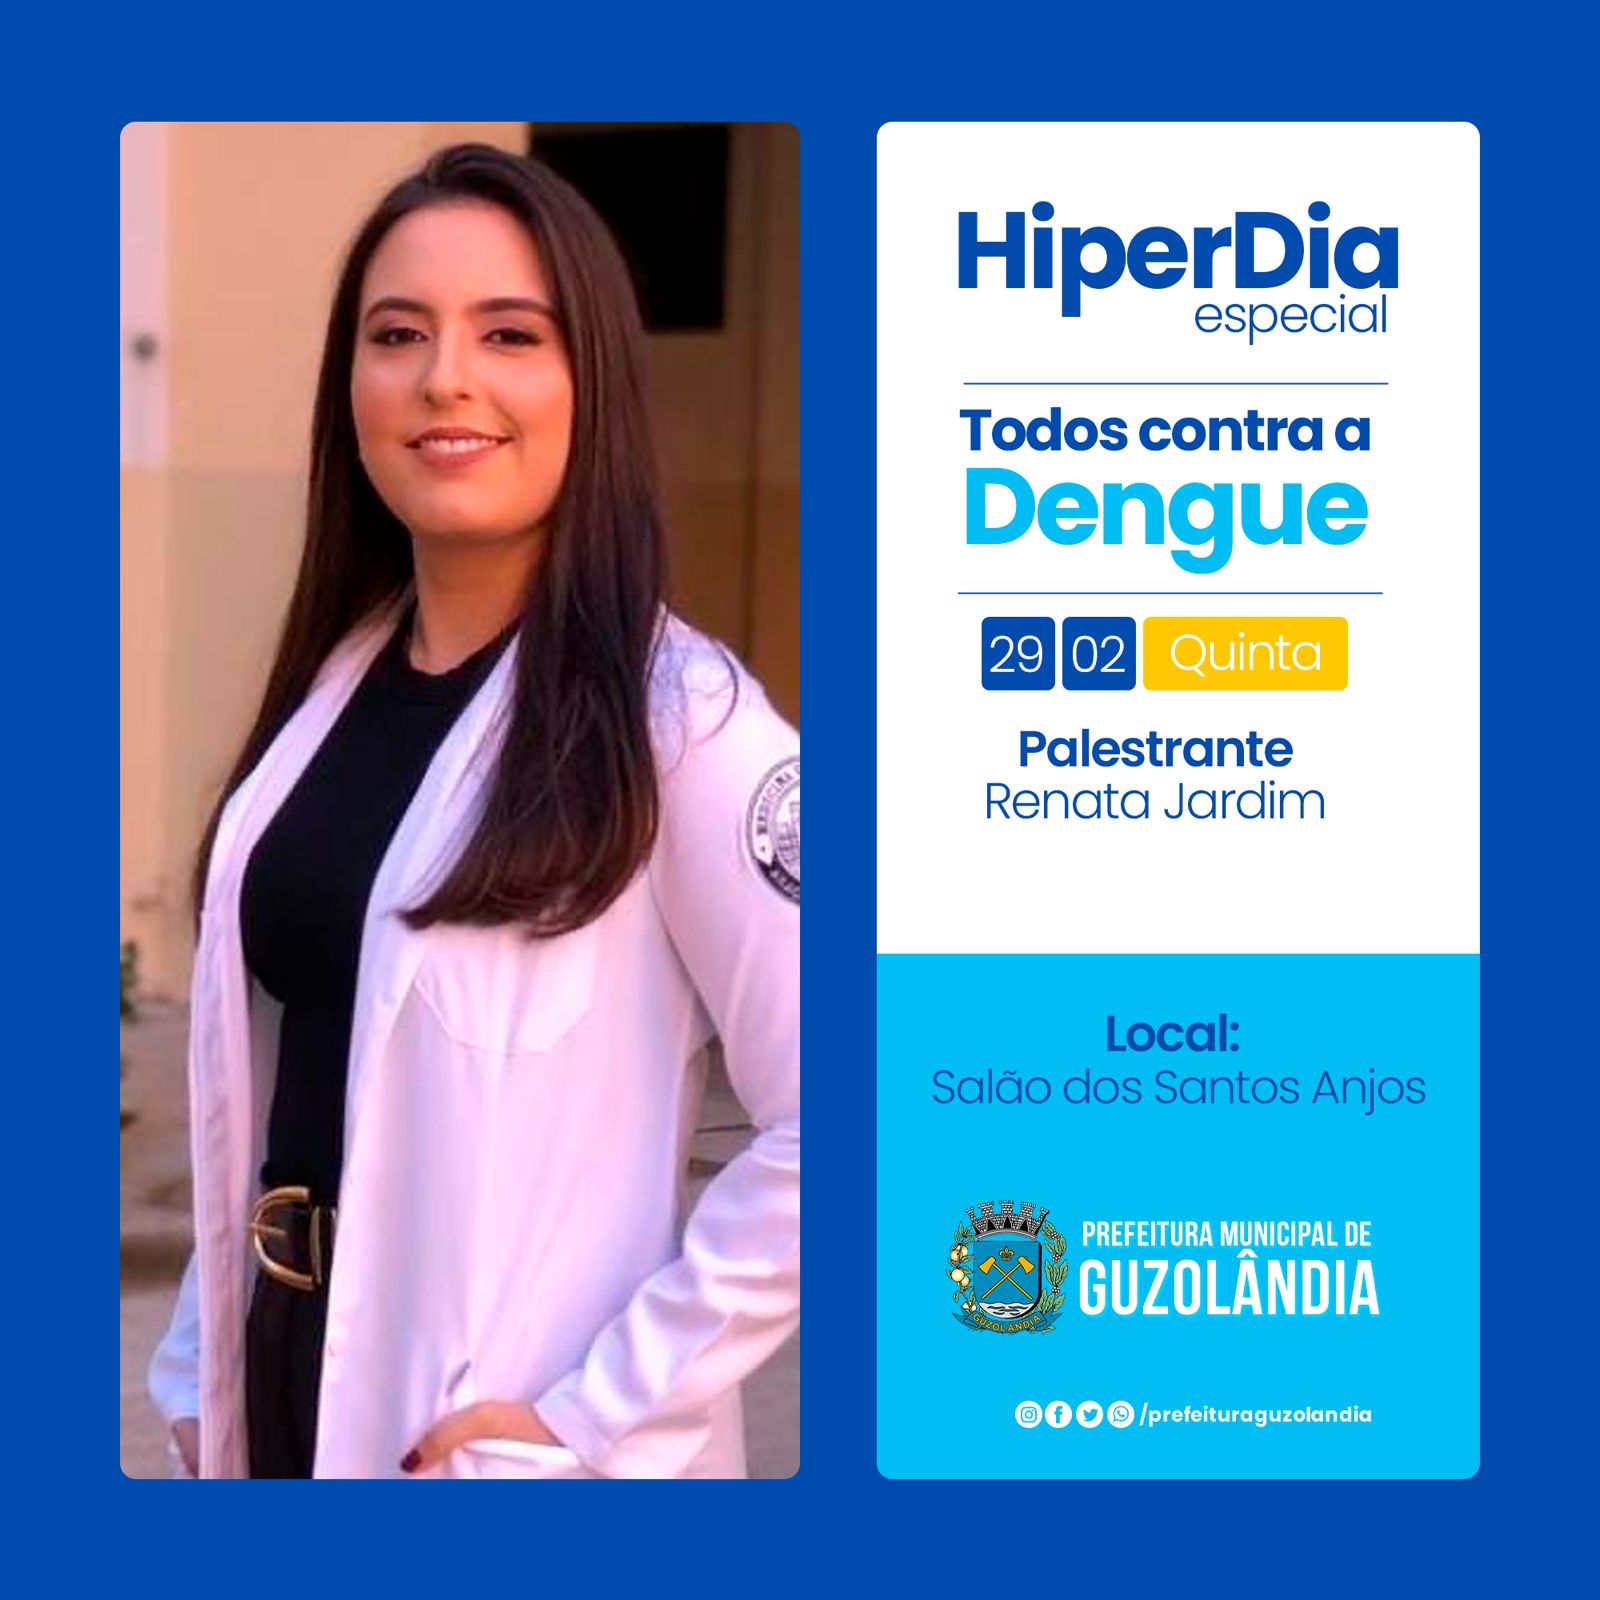 HIPERDIA ESPECIAL: Todos contra a dengue!